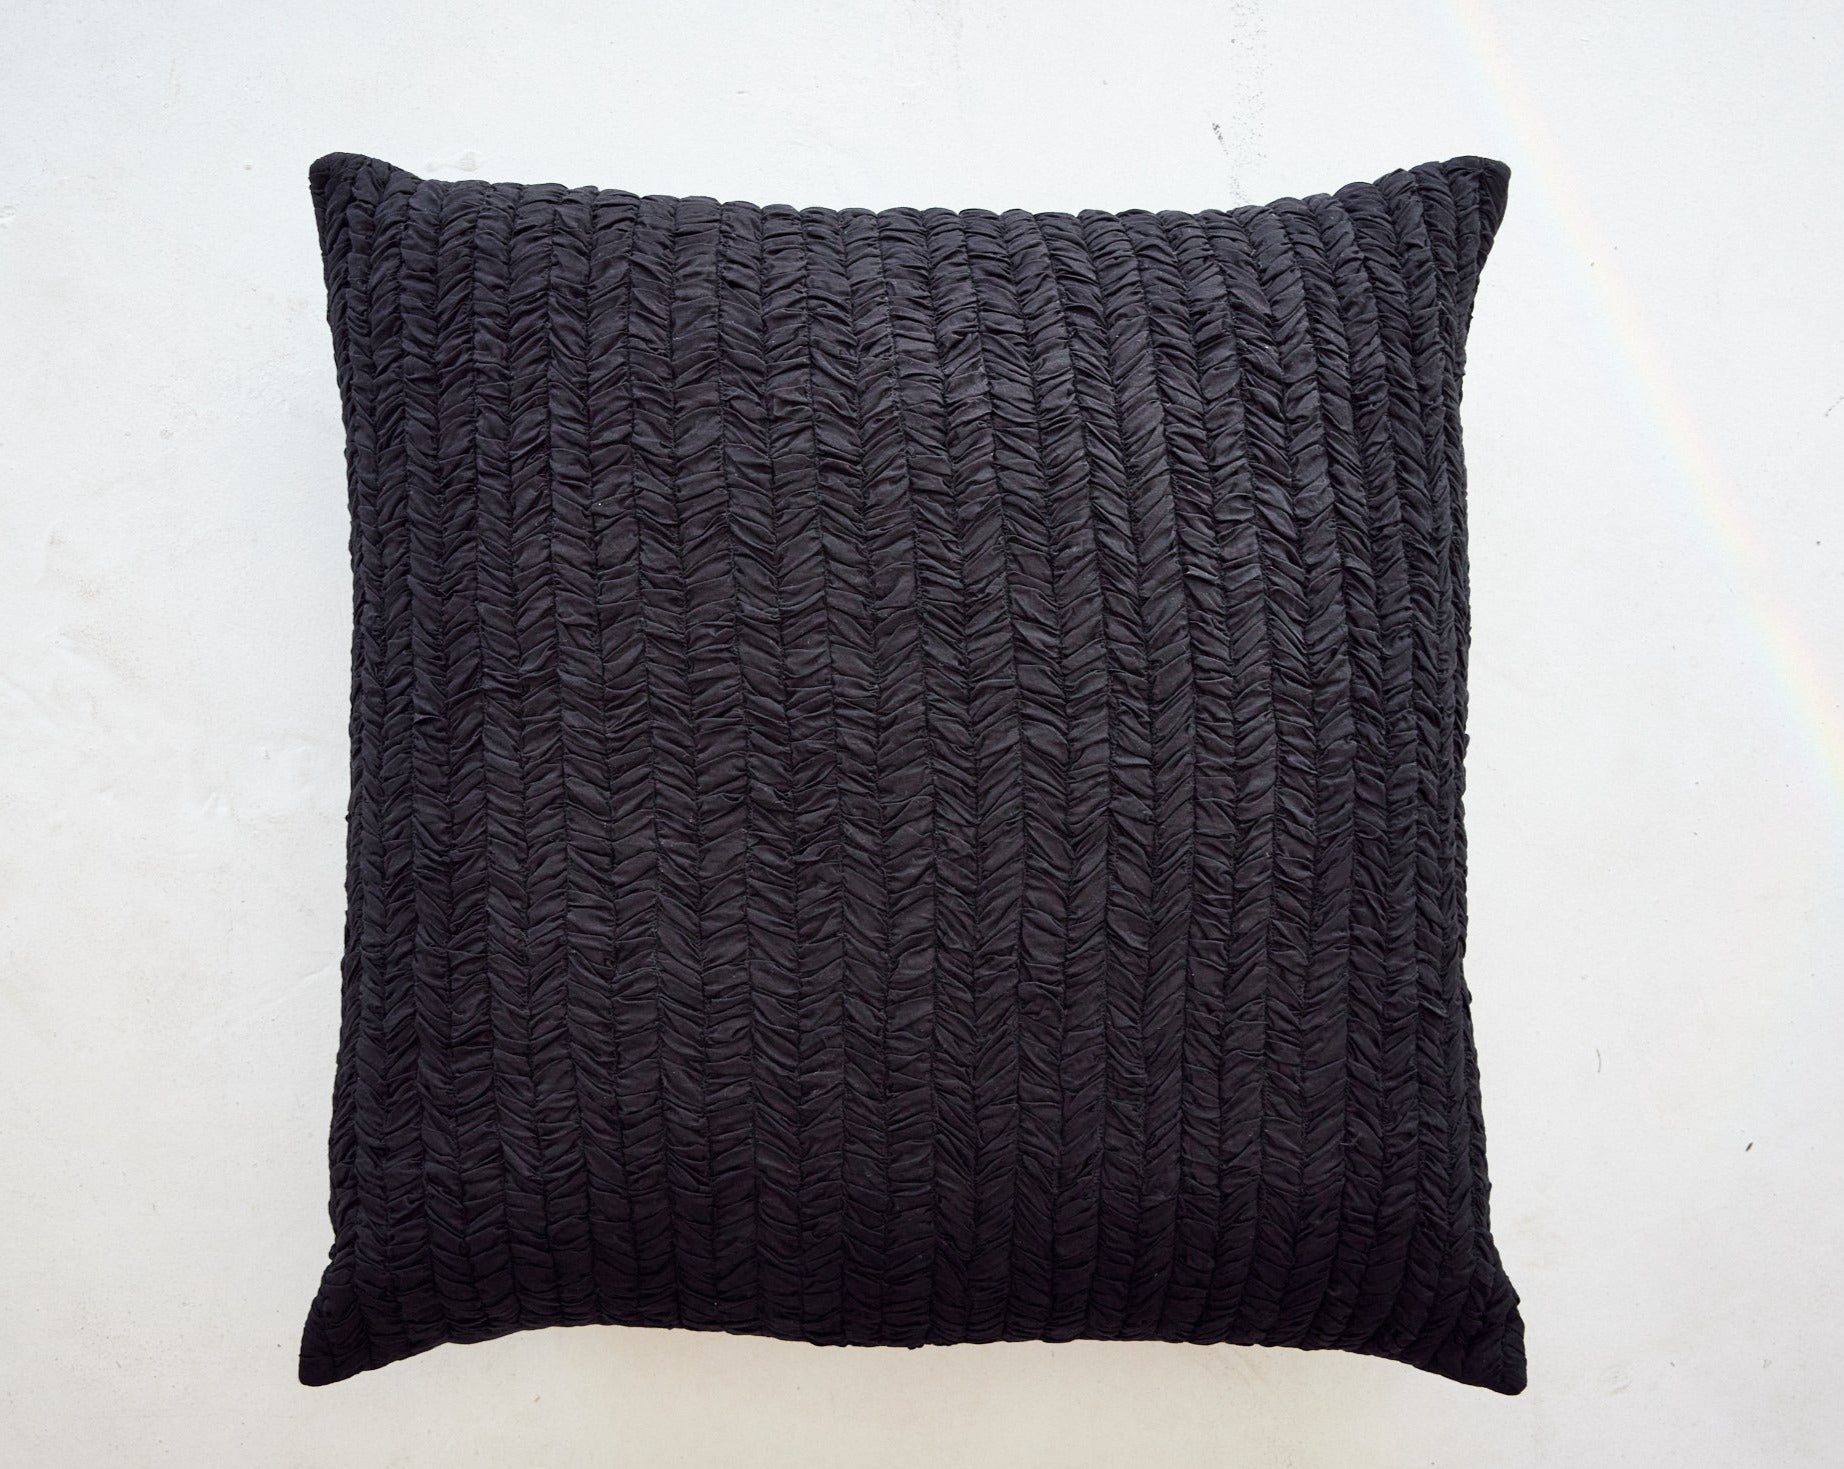 Herringbone handcrafted cotton voile cushion - black